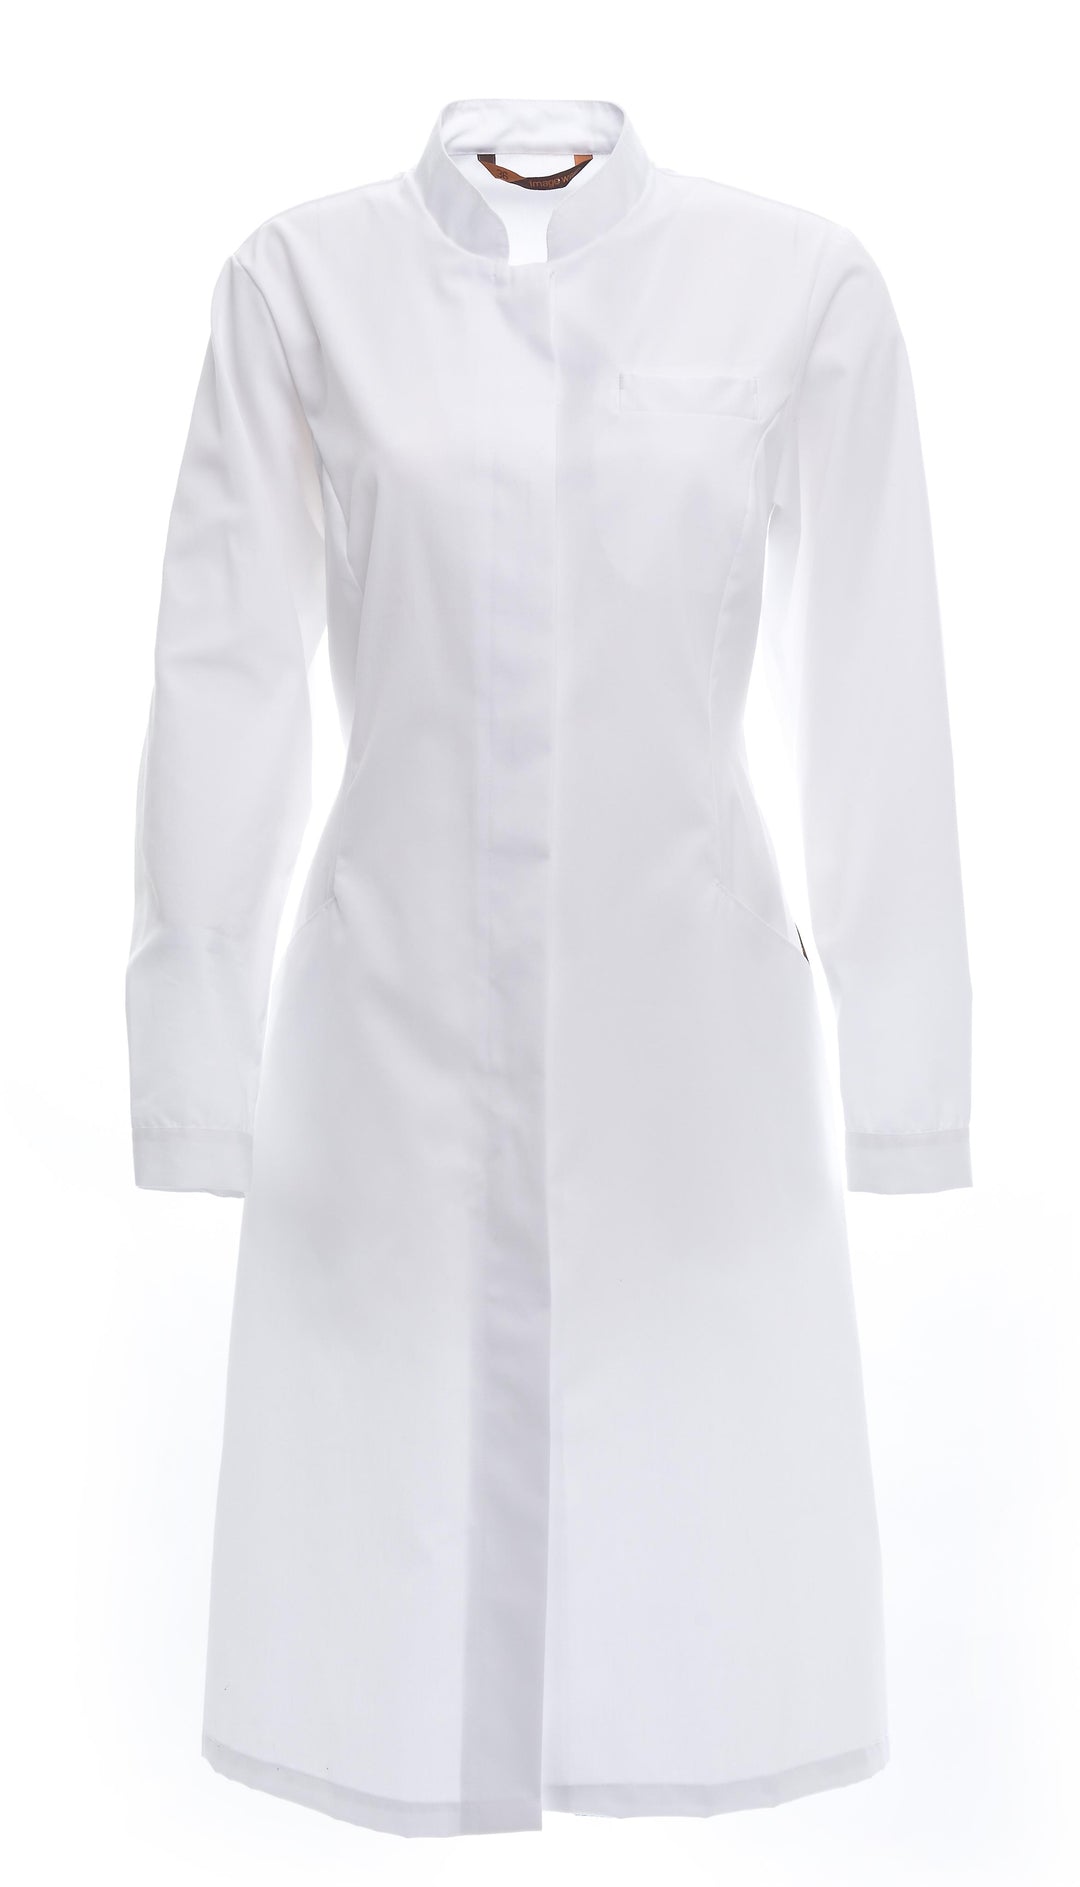 Women's medical coat, ph